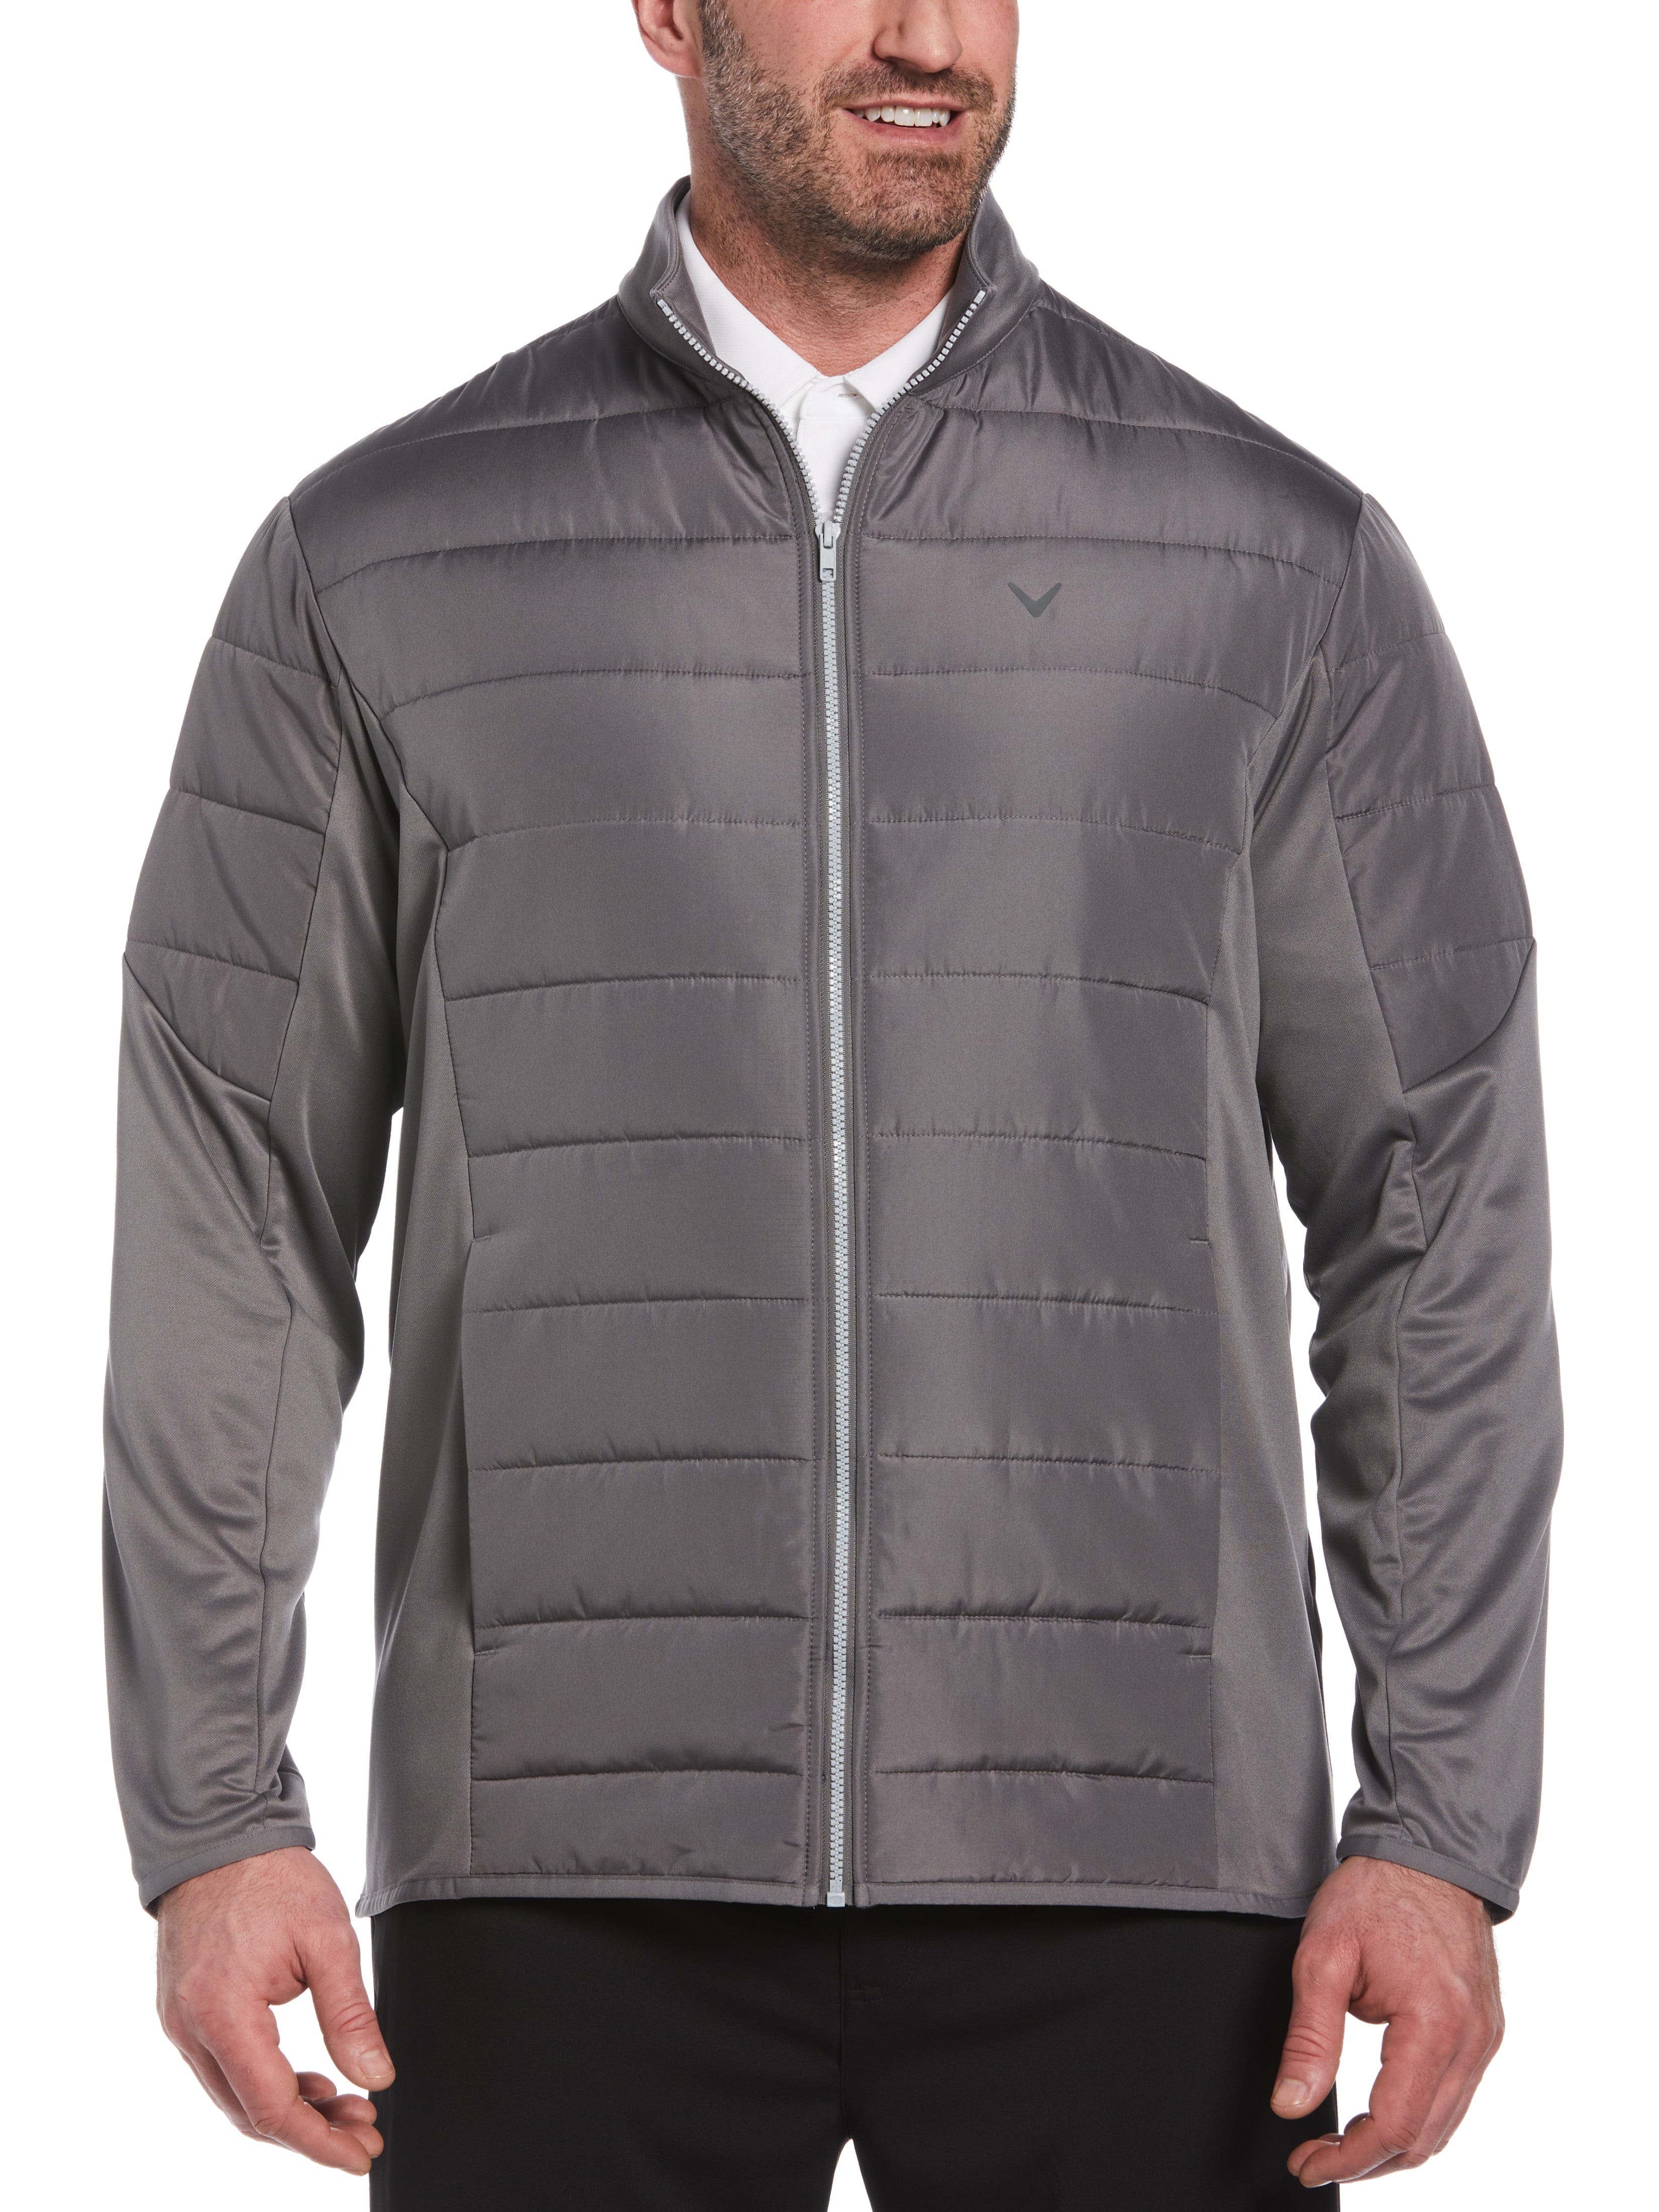 Callaway Apparel Mens Big & Tall Hybrid Performance Puffer Jacket Top, Size LT, Quiet Shade Gray, 100% Polyester | Golf Apparel Shop